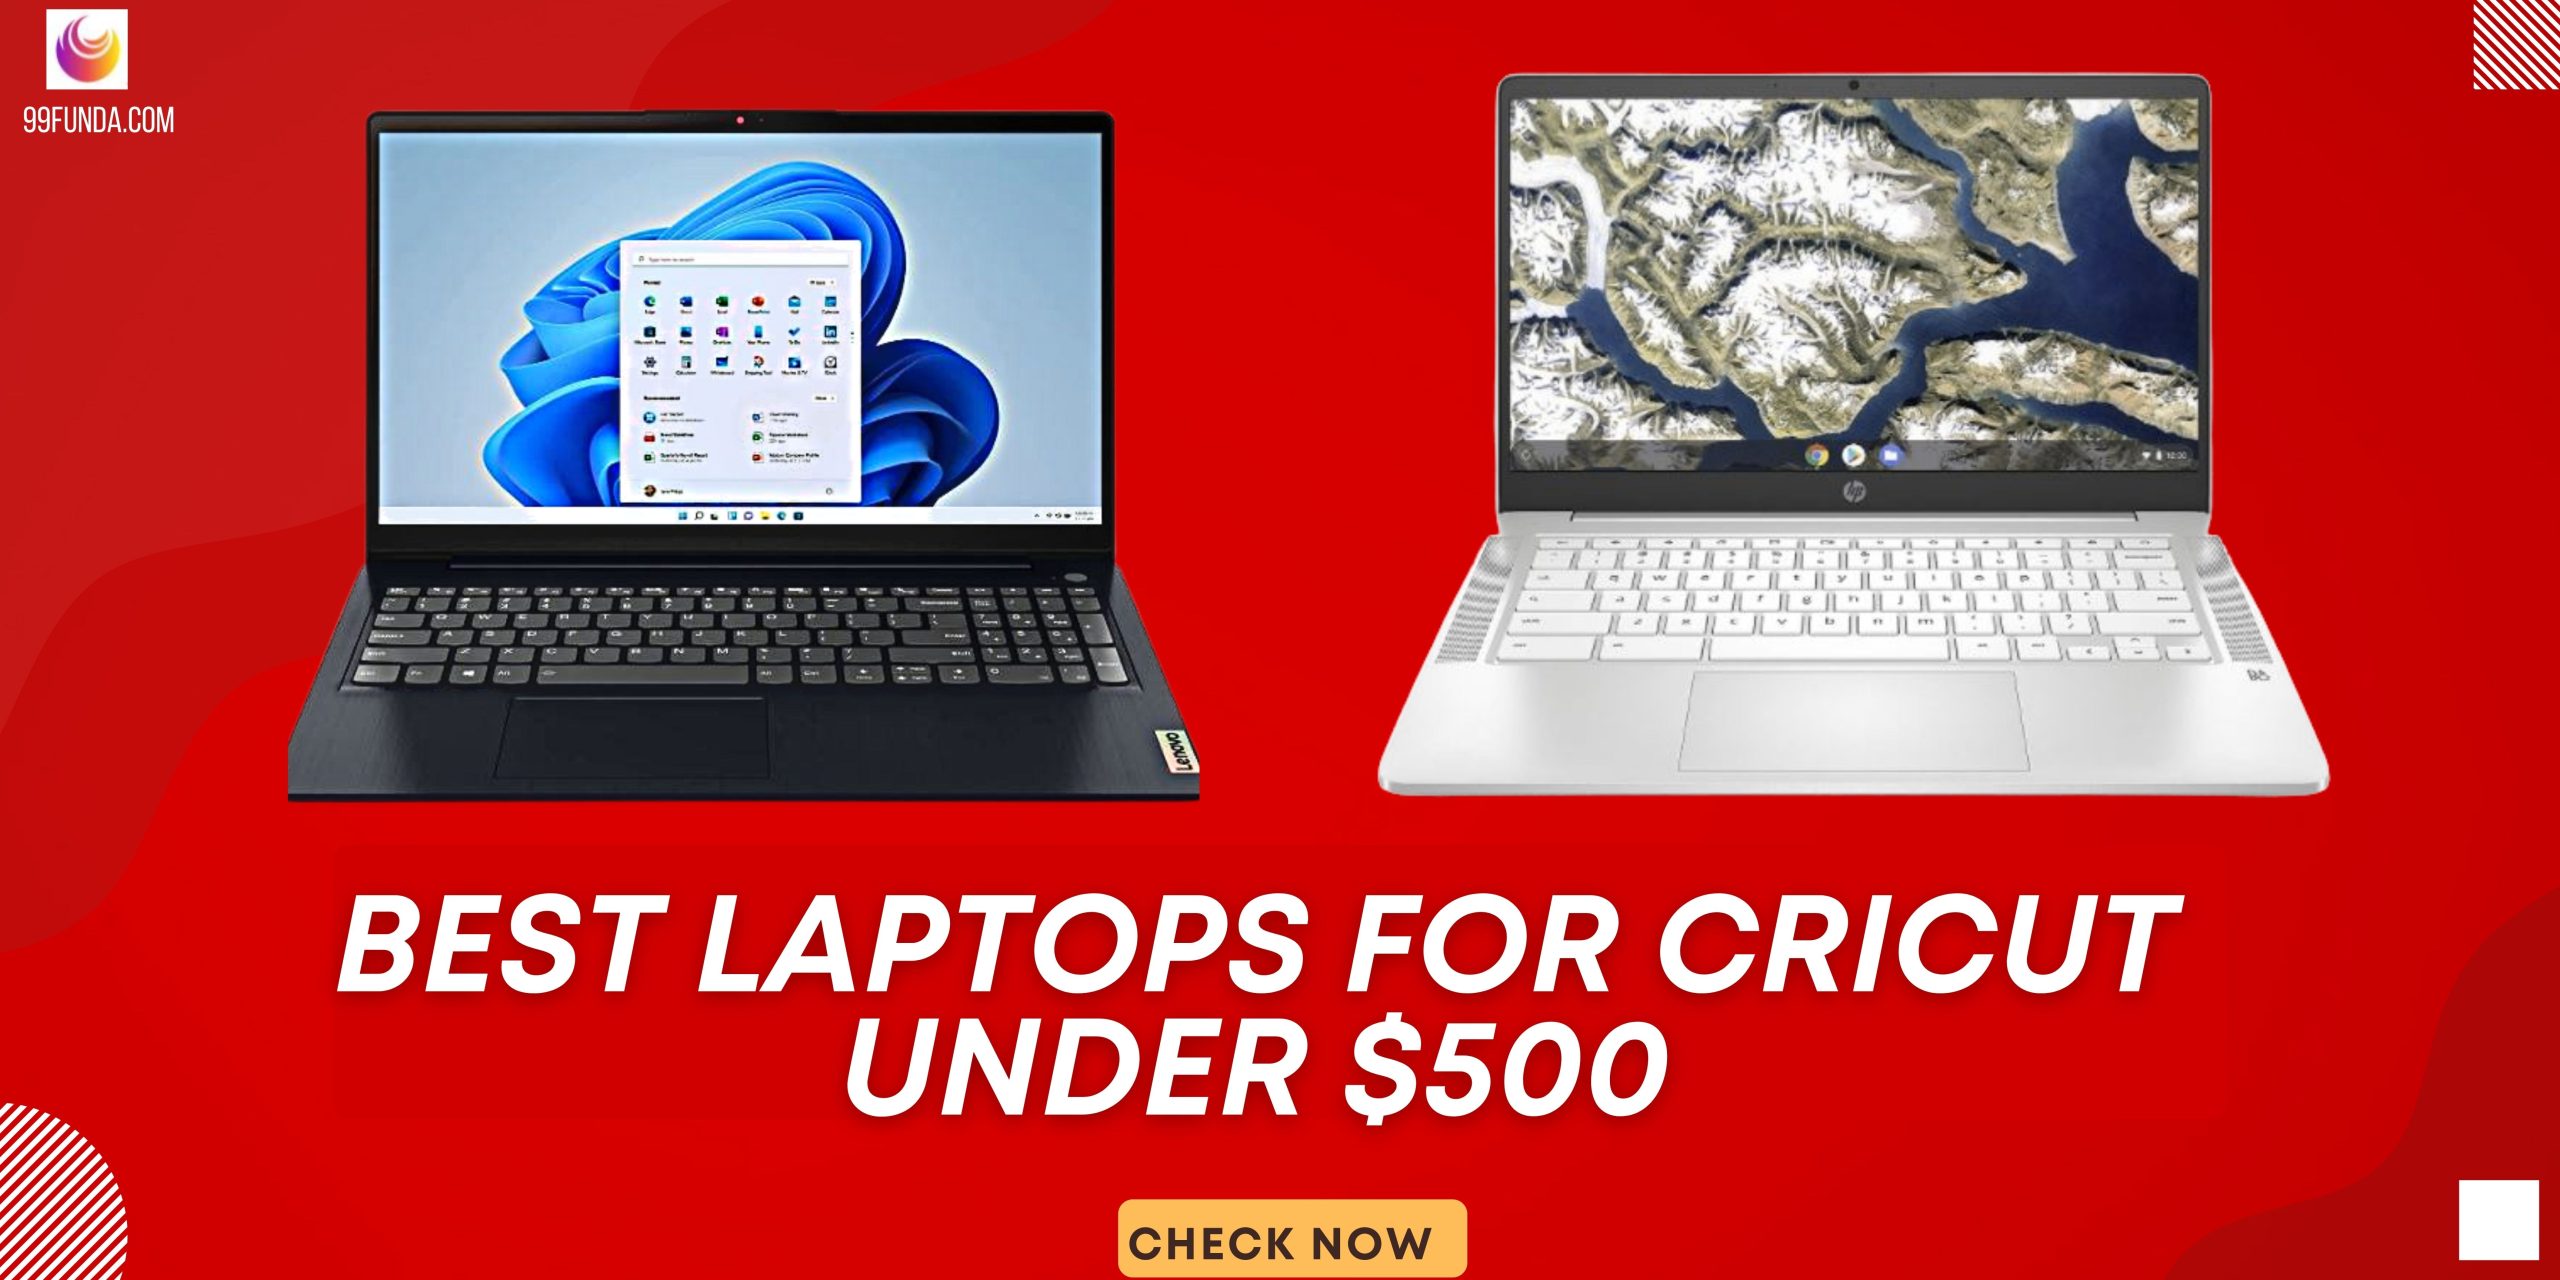 10 Best Laptops for Cricut Under $500 in 2022